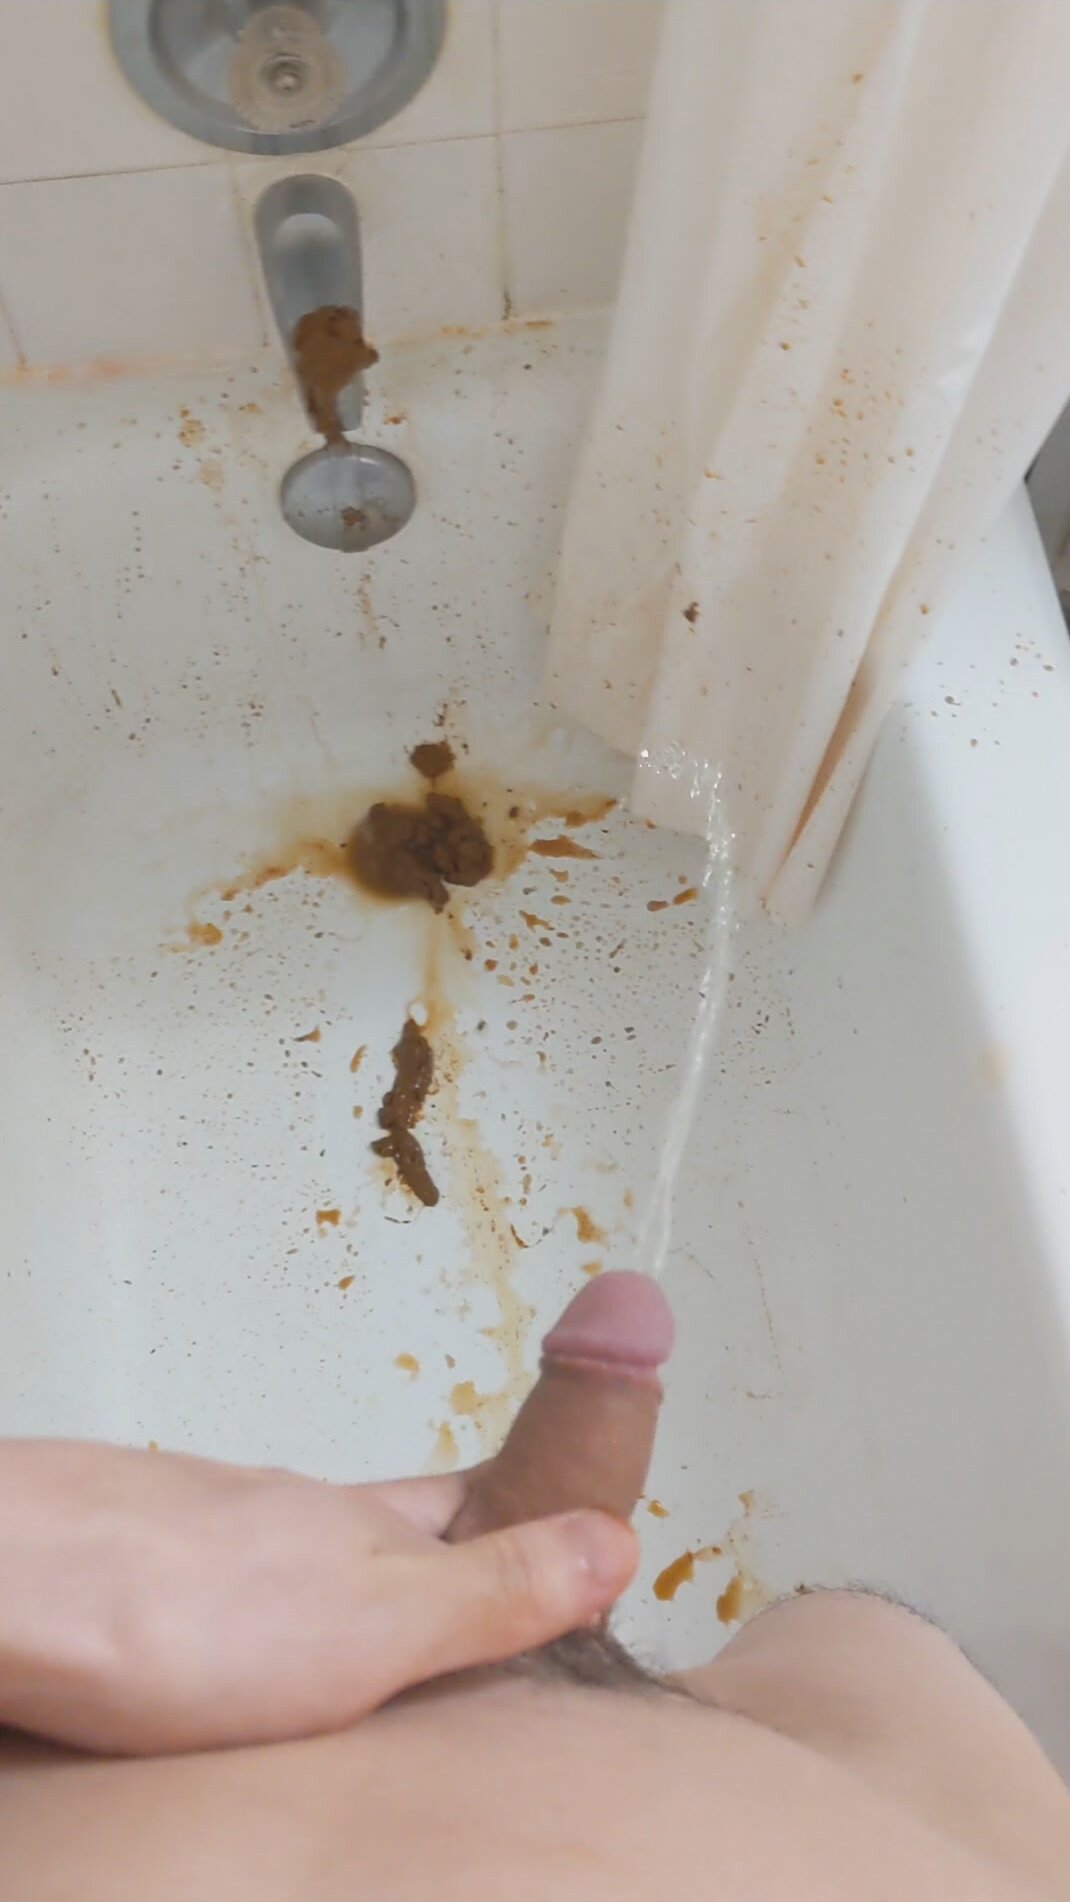 Pissing to clean shitty bathtub